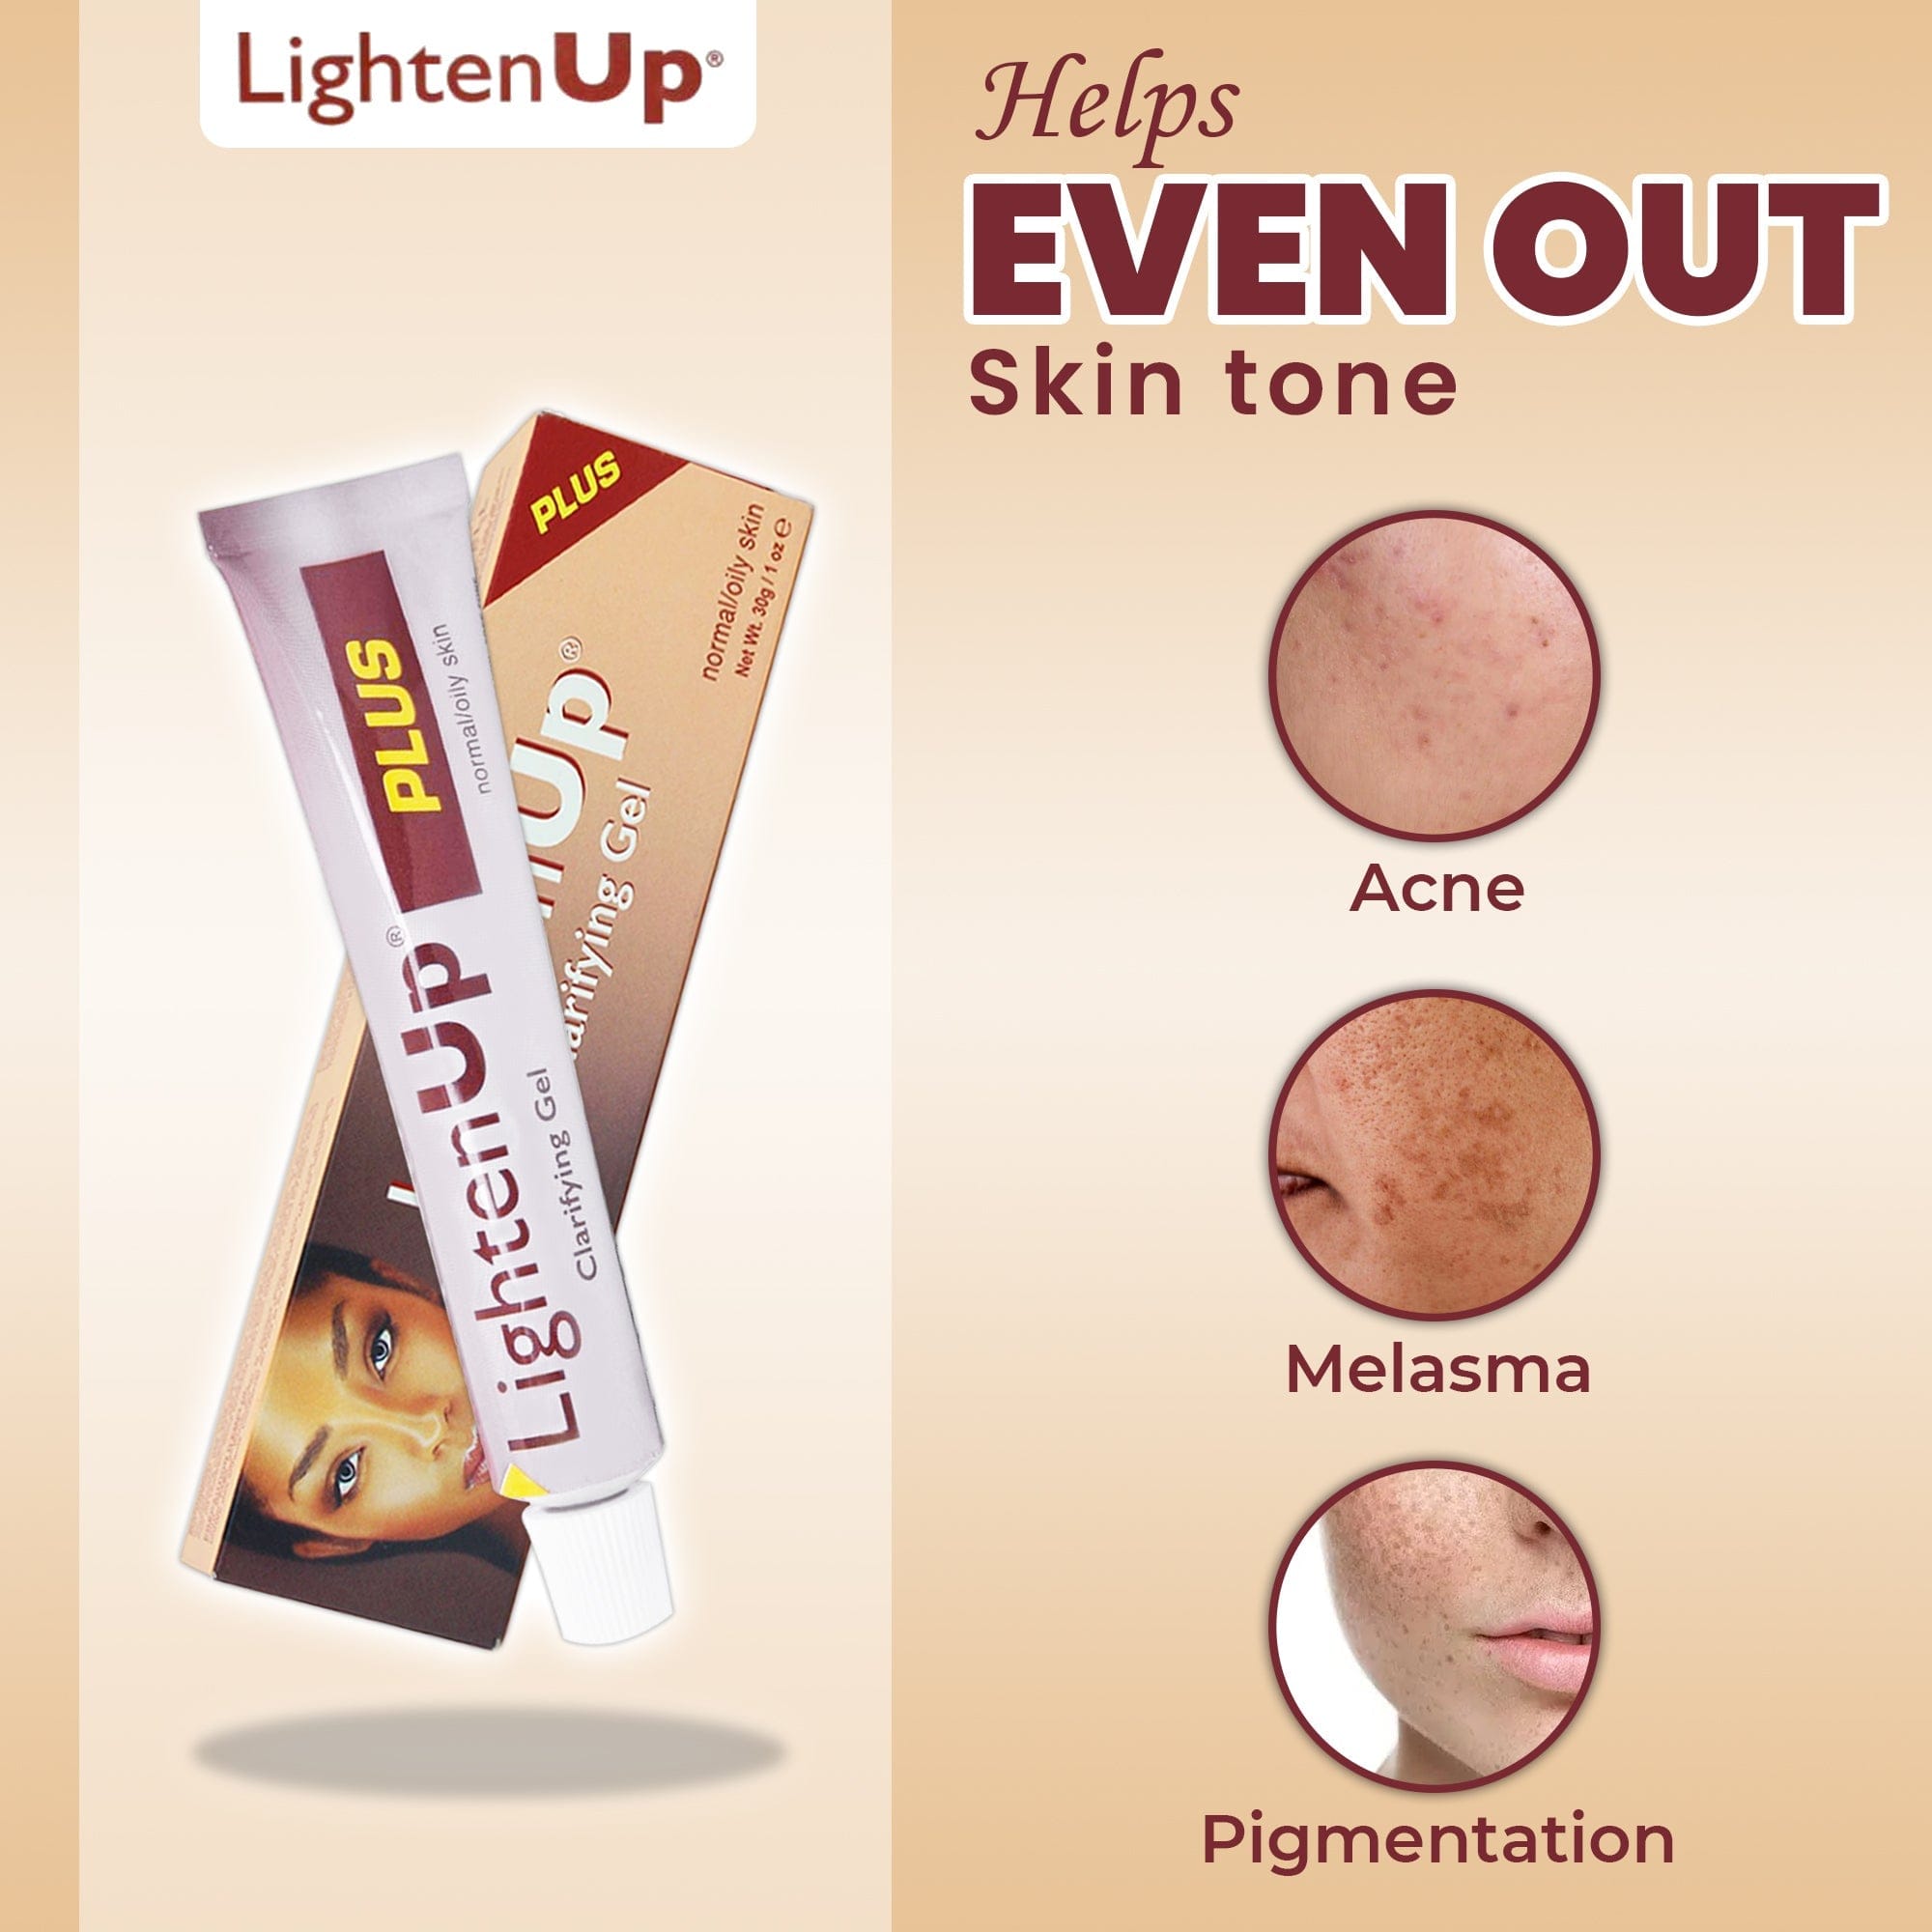 Omic LightenUp PLUS Gel chiarificatore in tubo - 30g / 1 Oz LightenUp - Mitchell Brands - Schiaritura della pelle, schiaritura della pelle, attenuazione delle macchie scure, burro di karité, prodotti per la crescita dei capelli